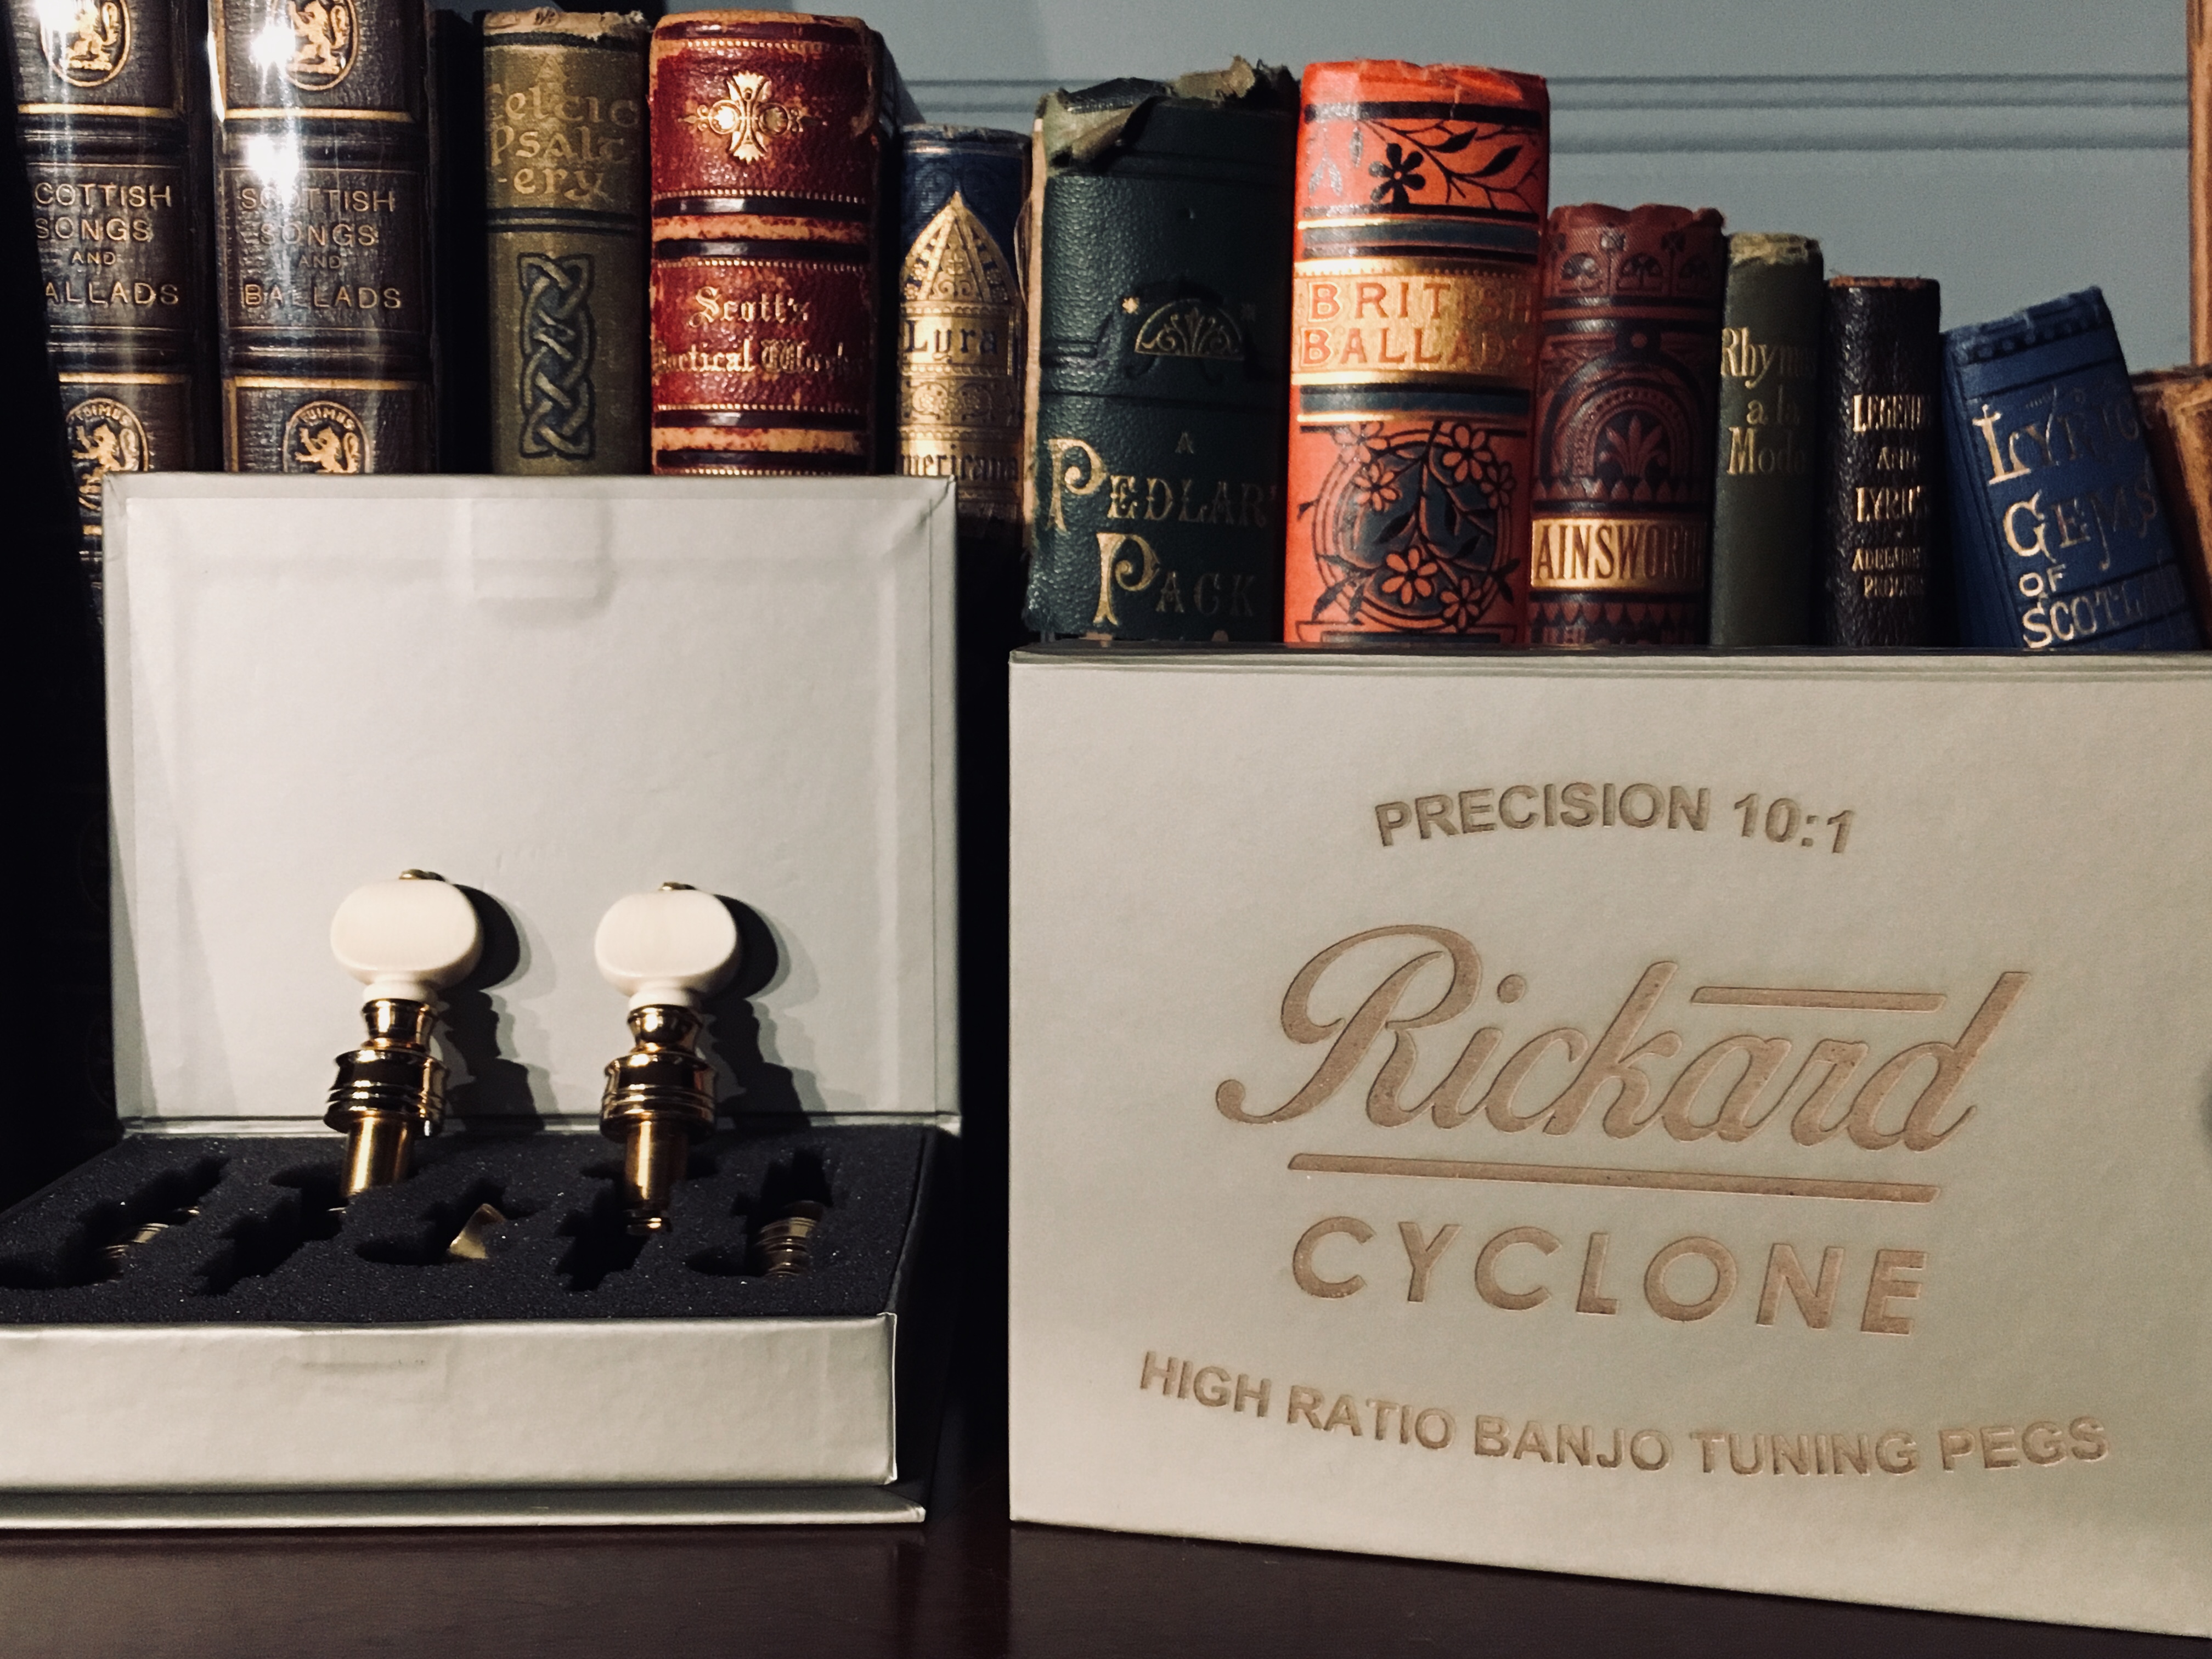 Rickard Cyclone 10:1 High Ratio 5-String Banjo Tuners - Set of 5 - Ant -  Banjo Ben's General Store